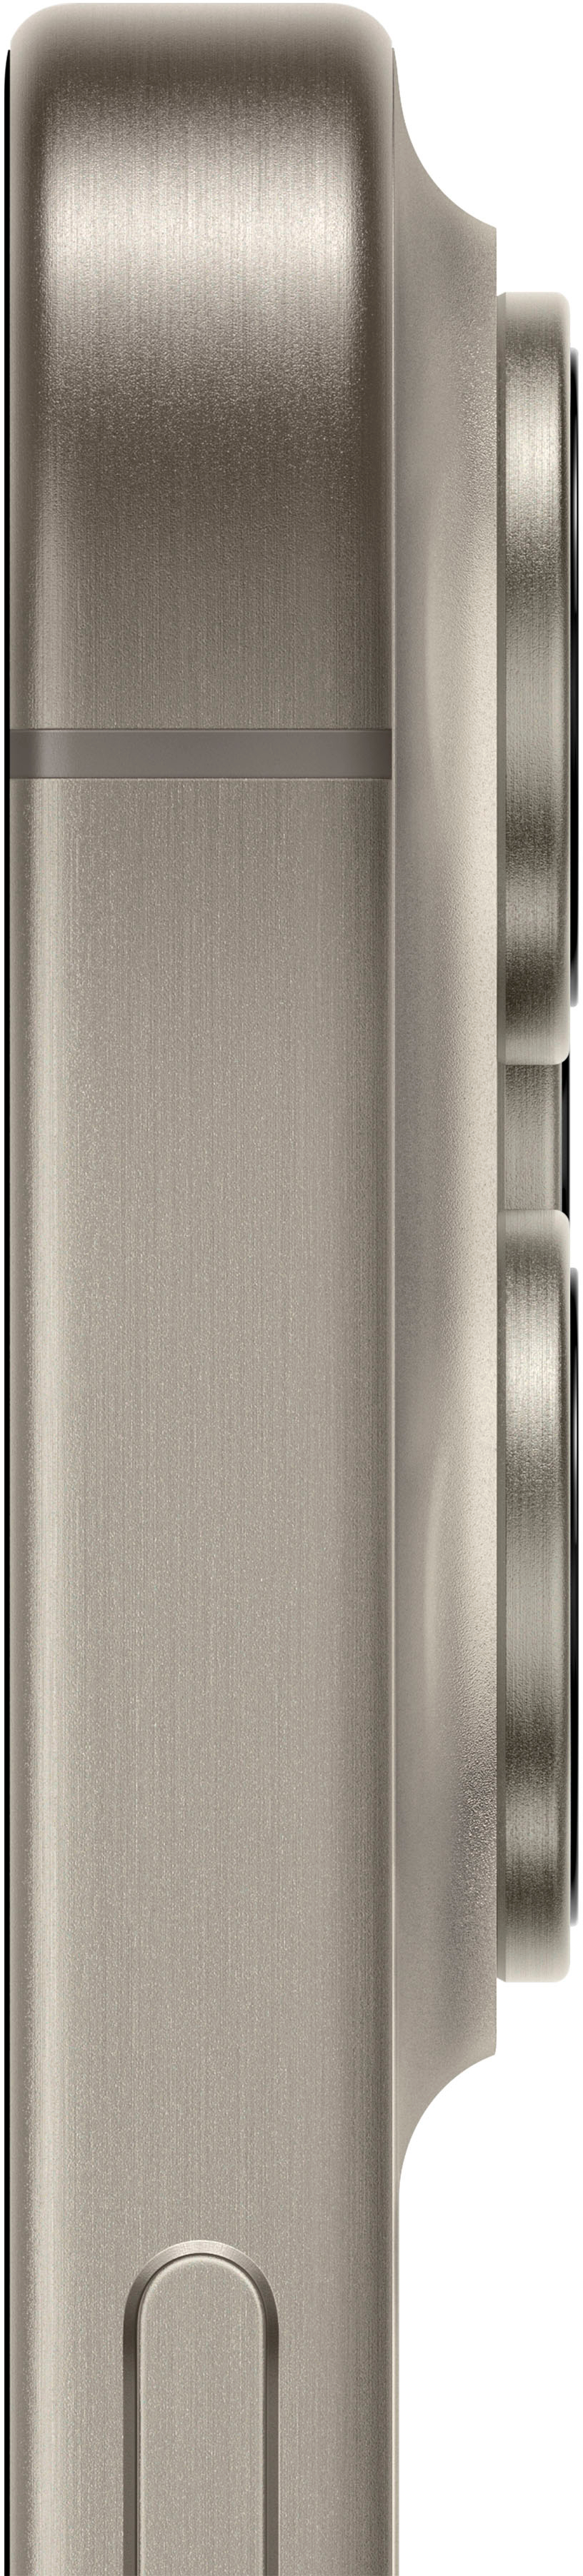 Apple iPhone 15 Pro Max 256GB Natural Titanium (Verizon) MU683LL/A